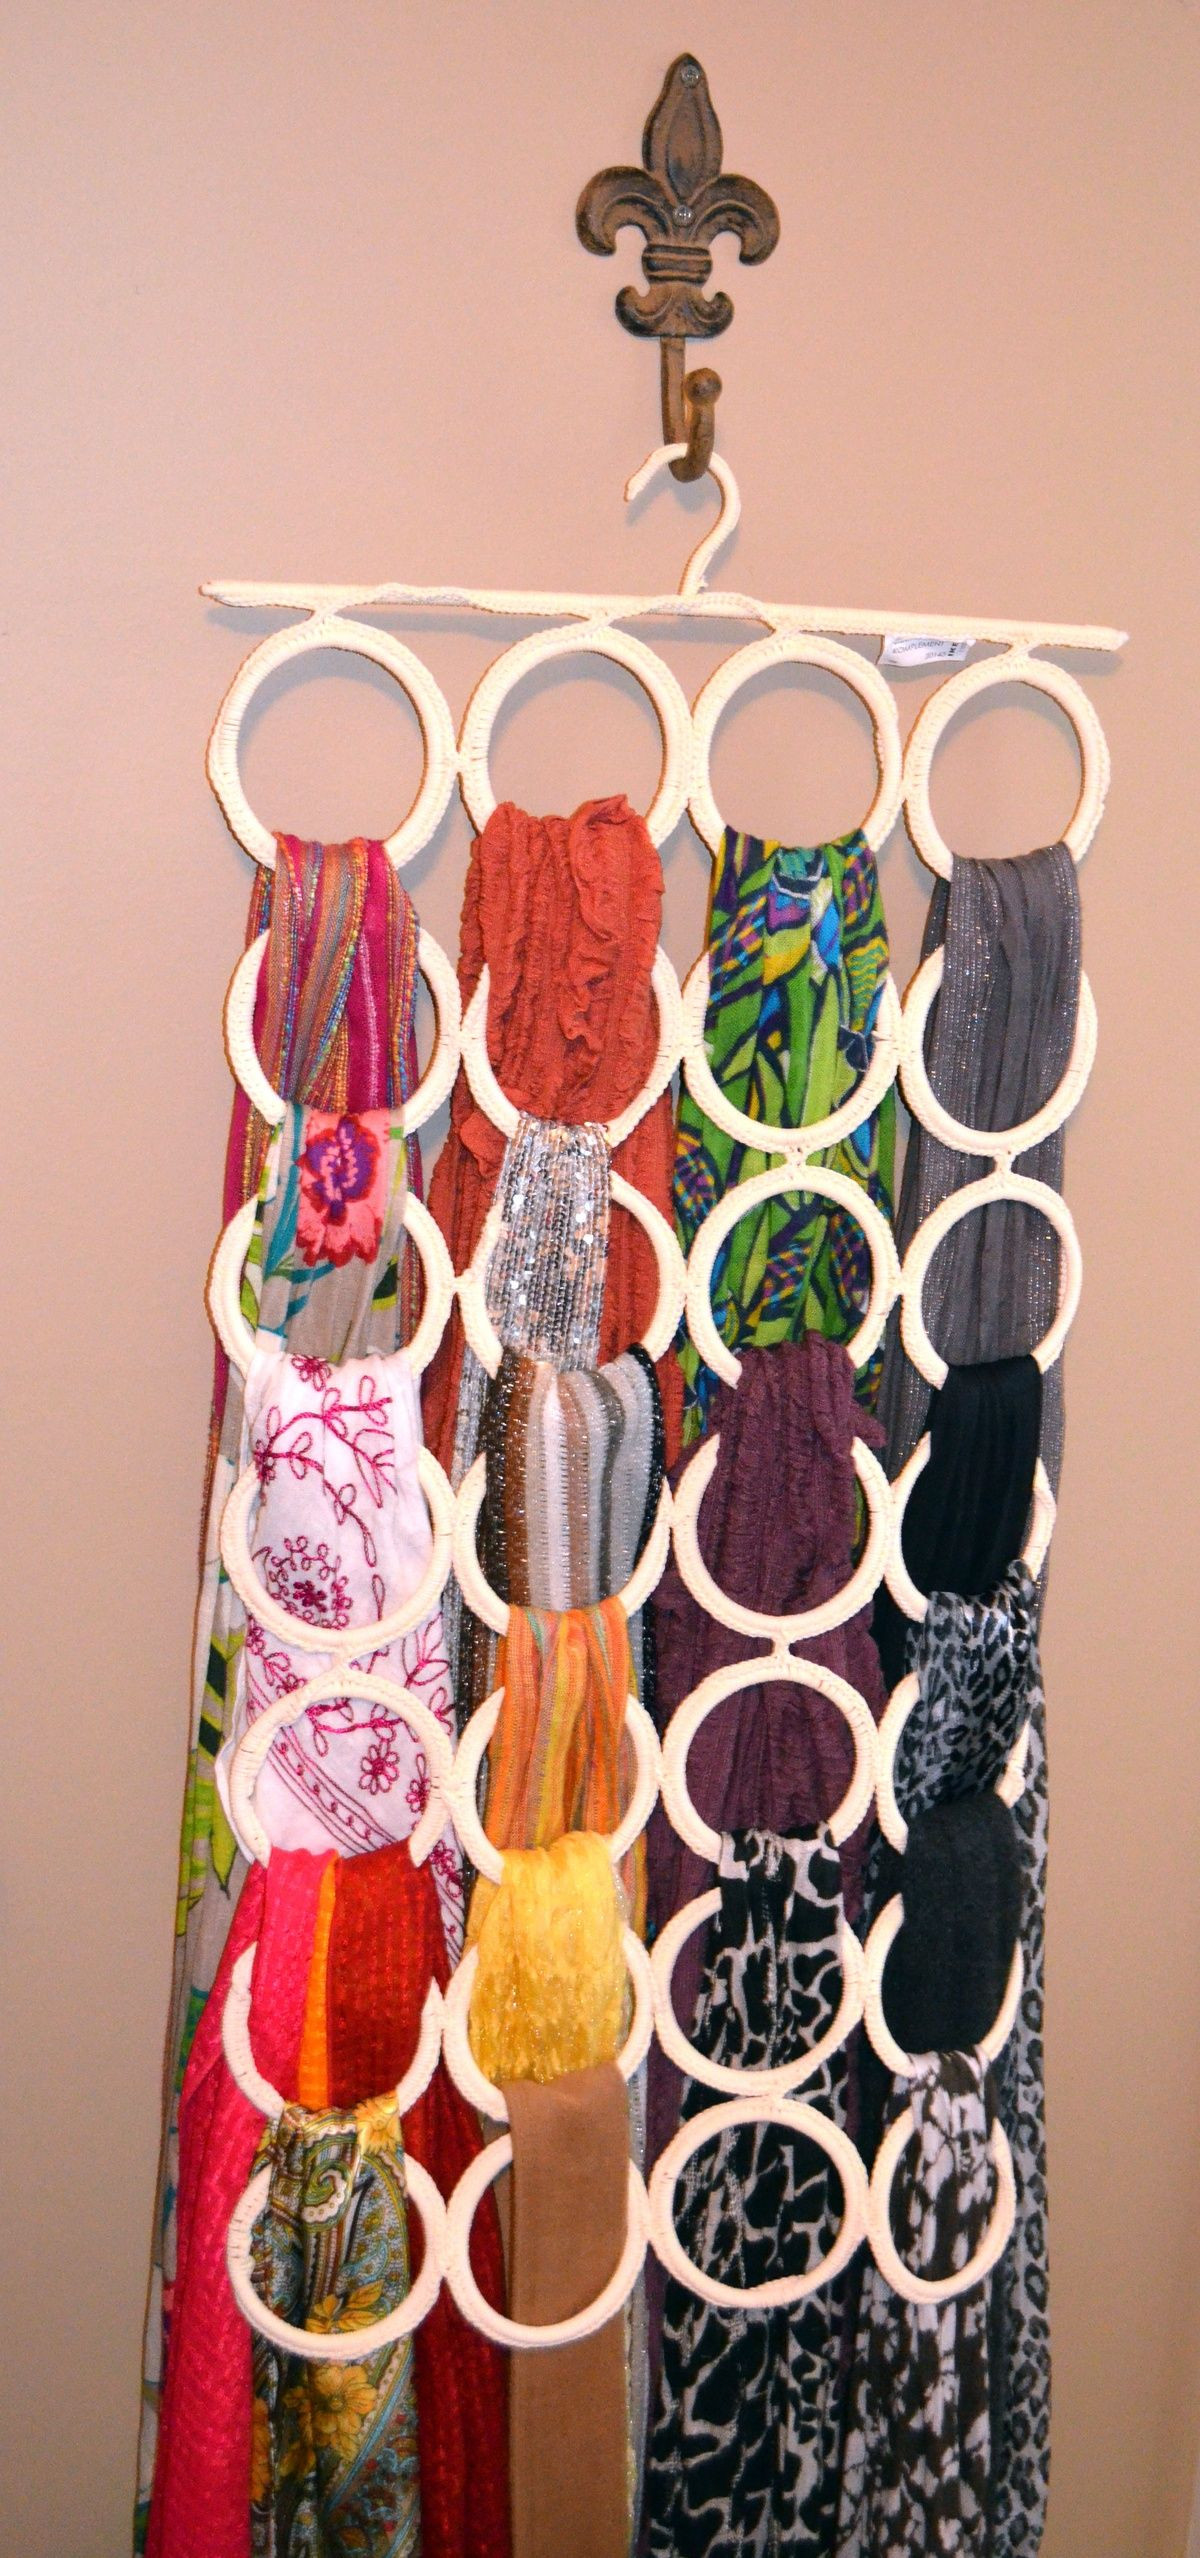 DIY Scarf Organizer
 "Organize my scarves " I m a certified scarf lover